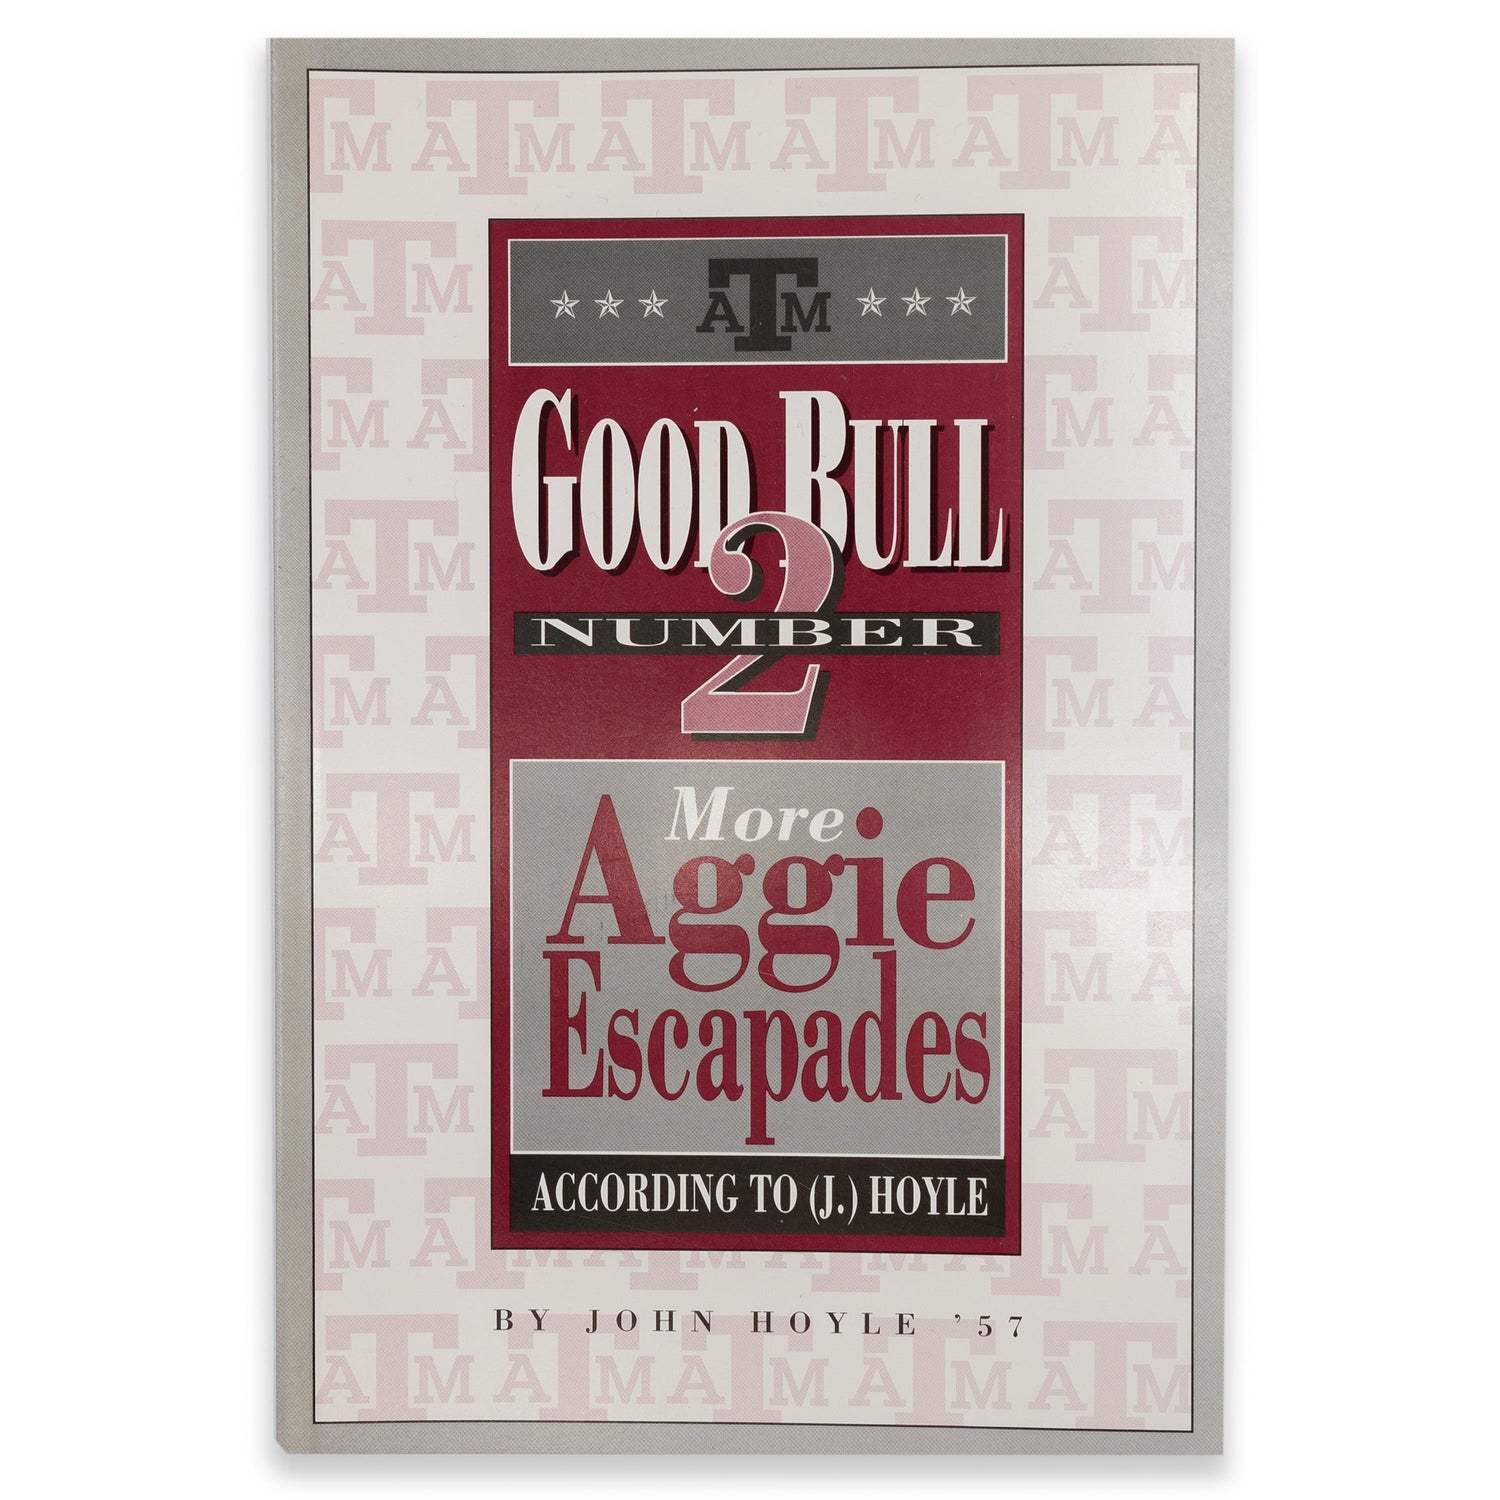 Good Bull #2 More Aggie Escapades By John Hoyle